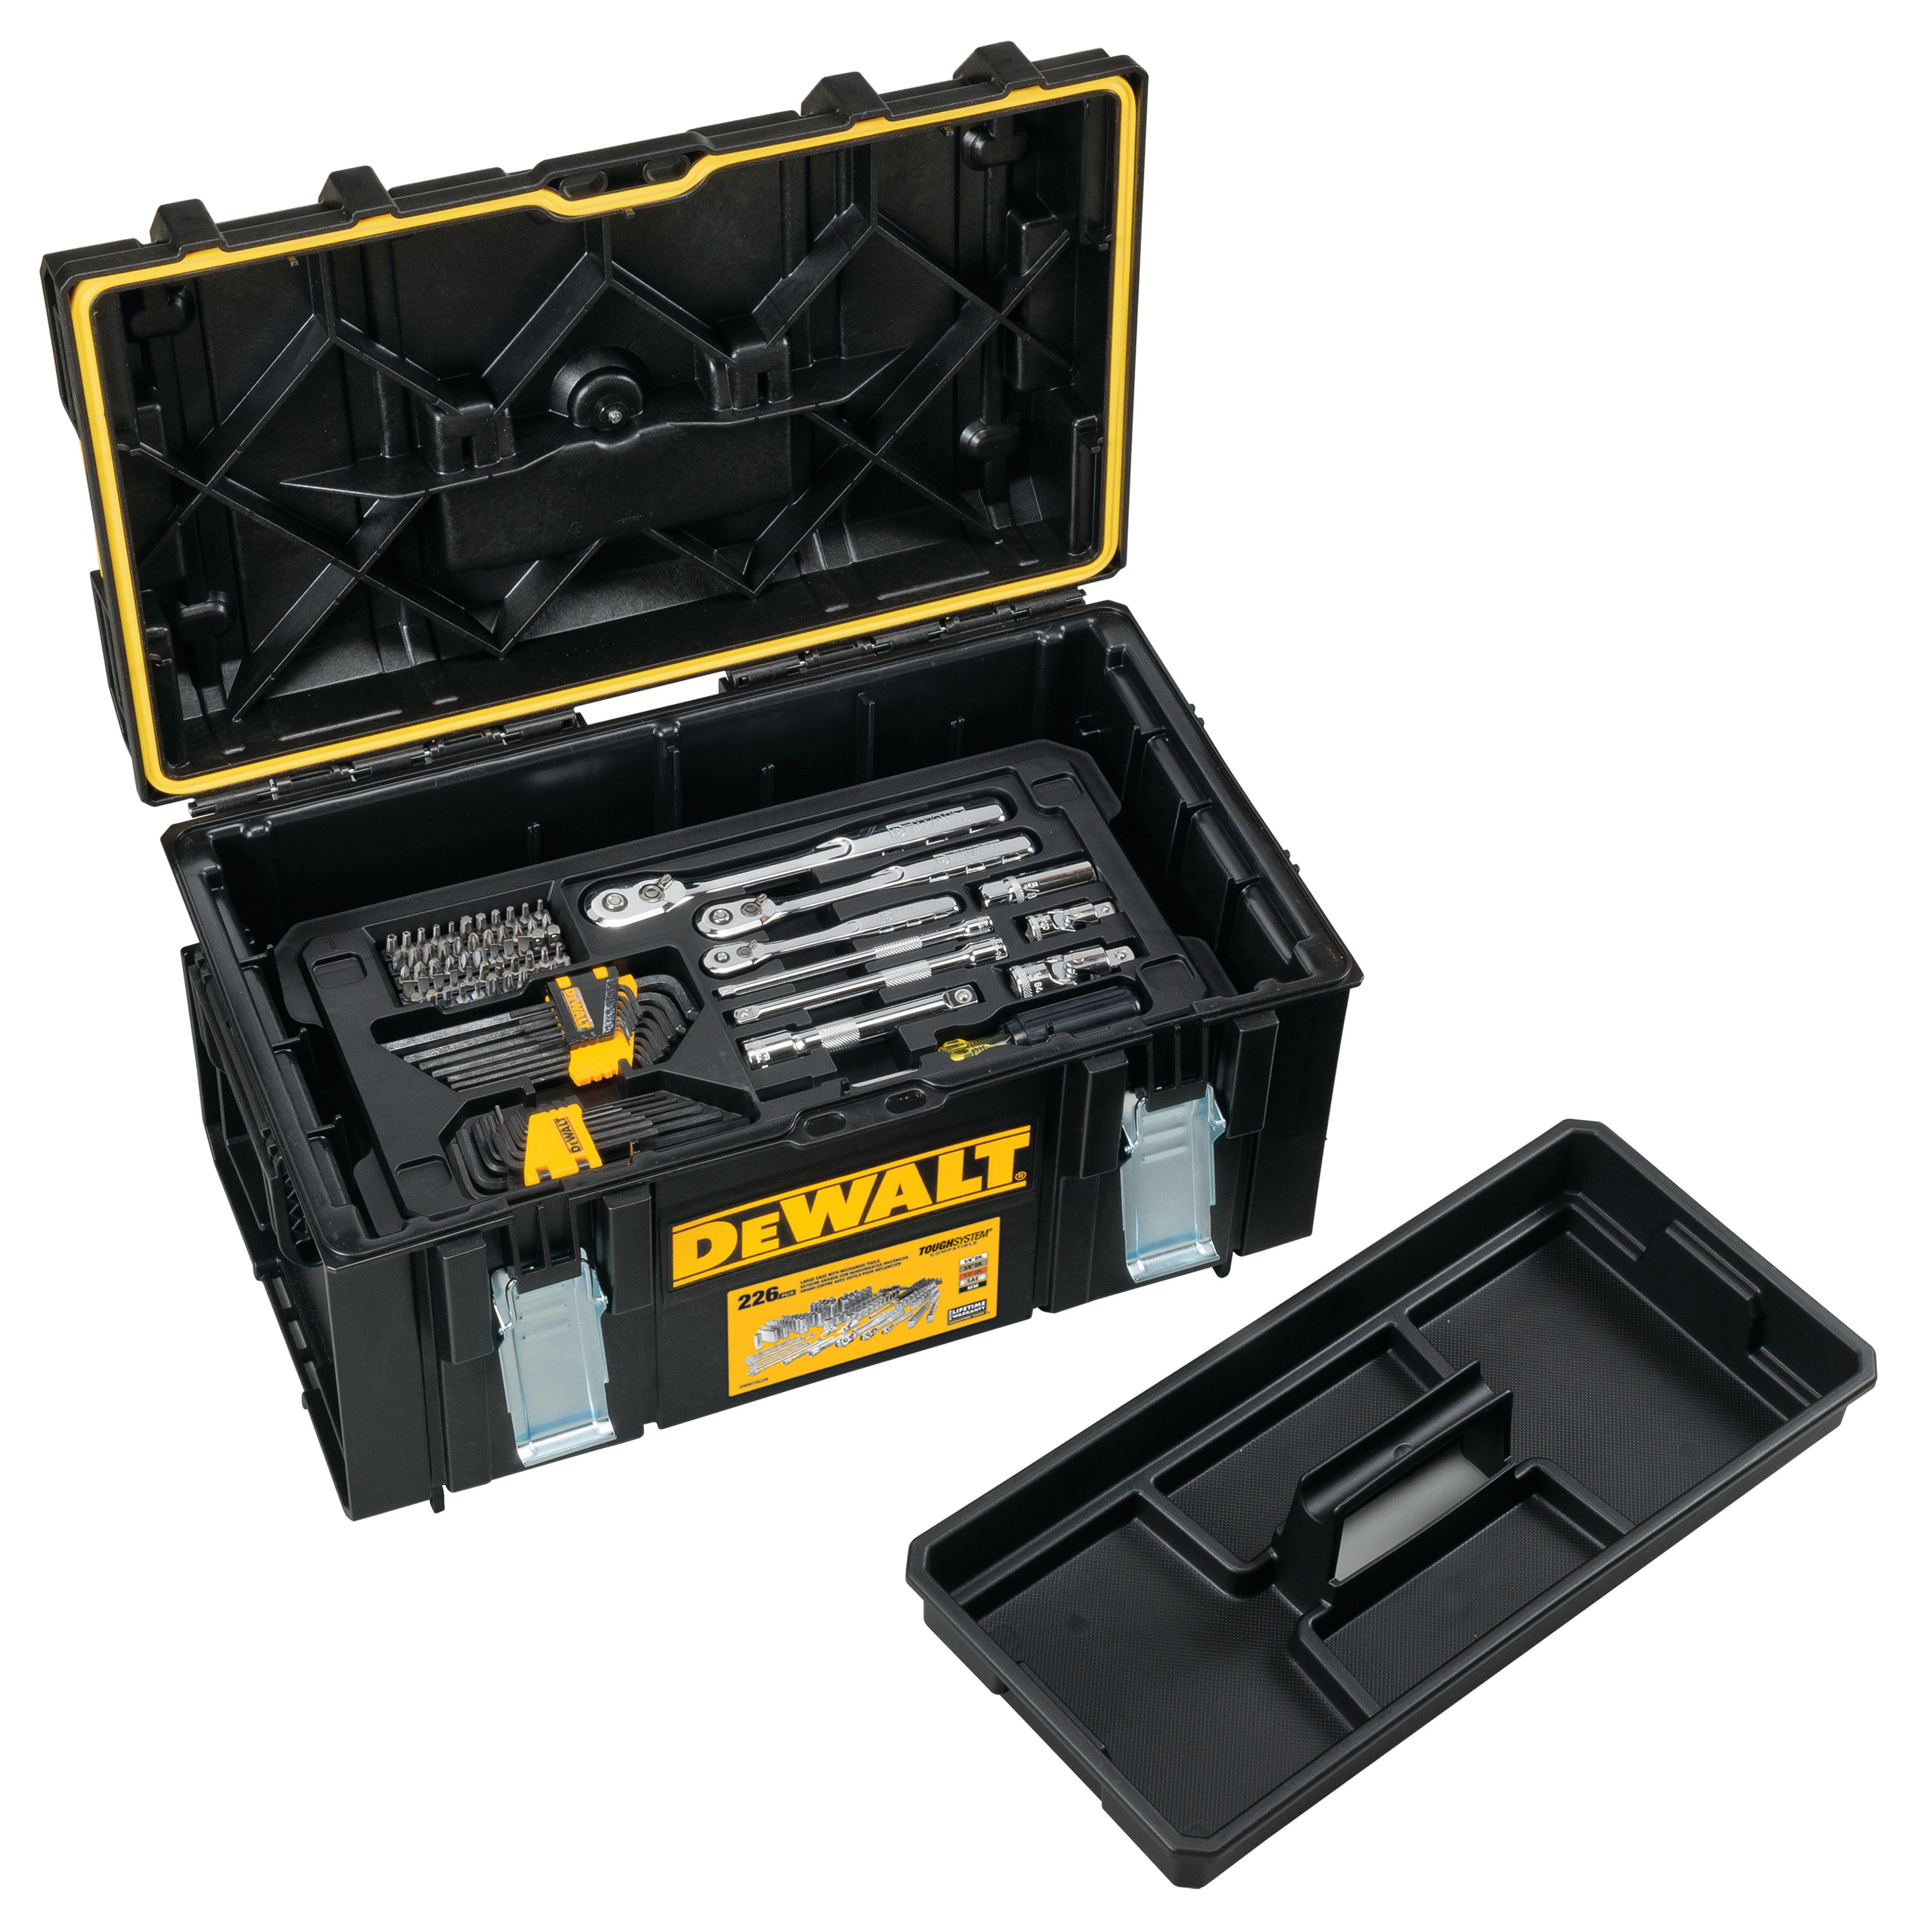 45 Piece Dewalt Screwdriving Set Combination Mechanics Kit Hand Tools with Case